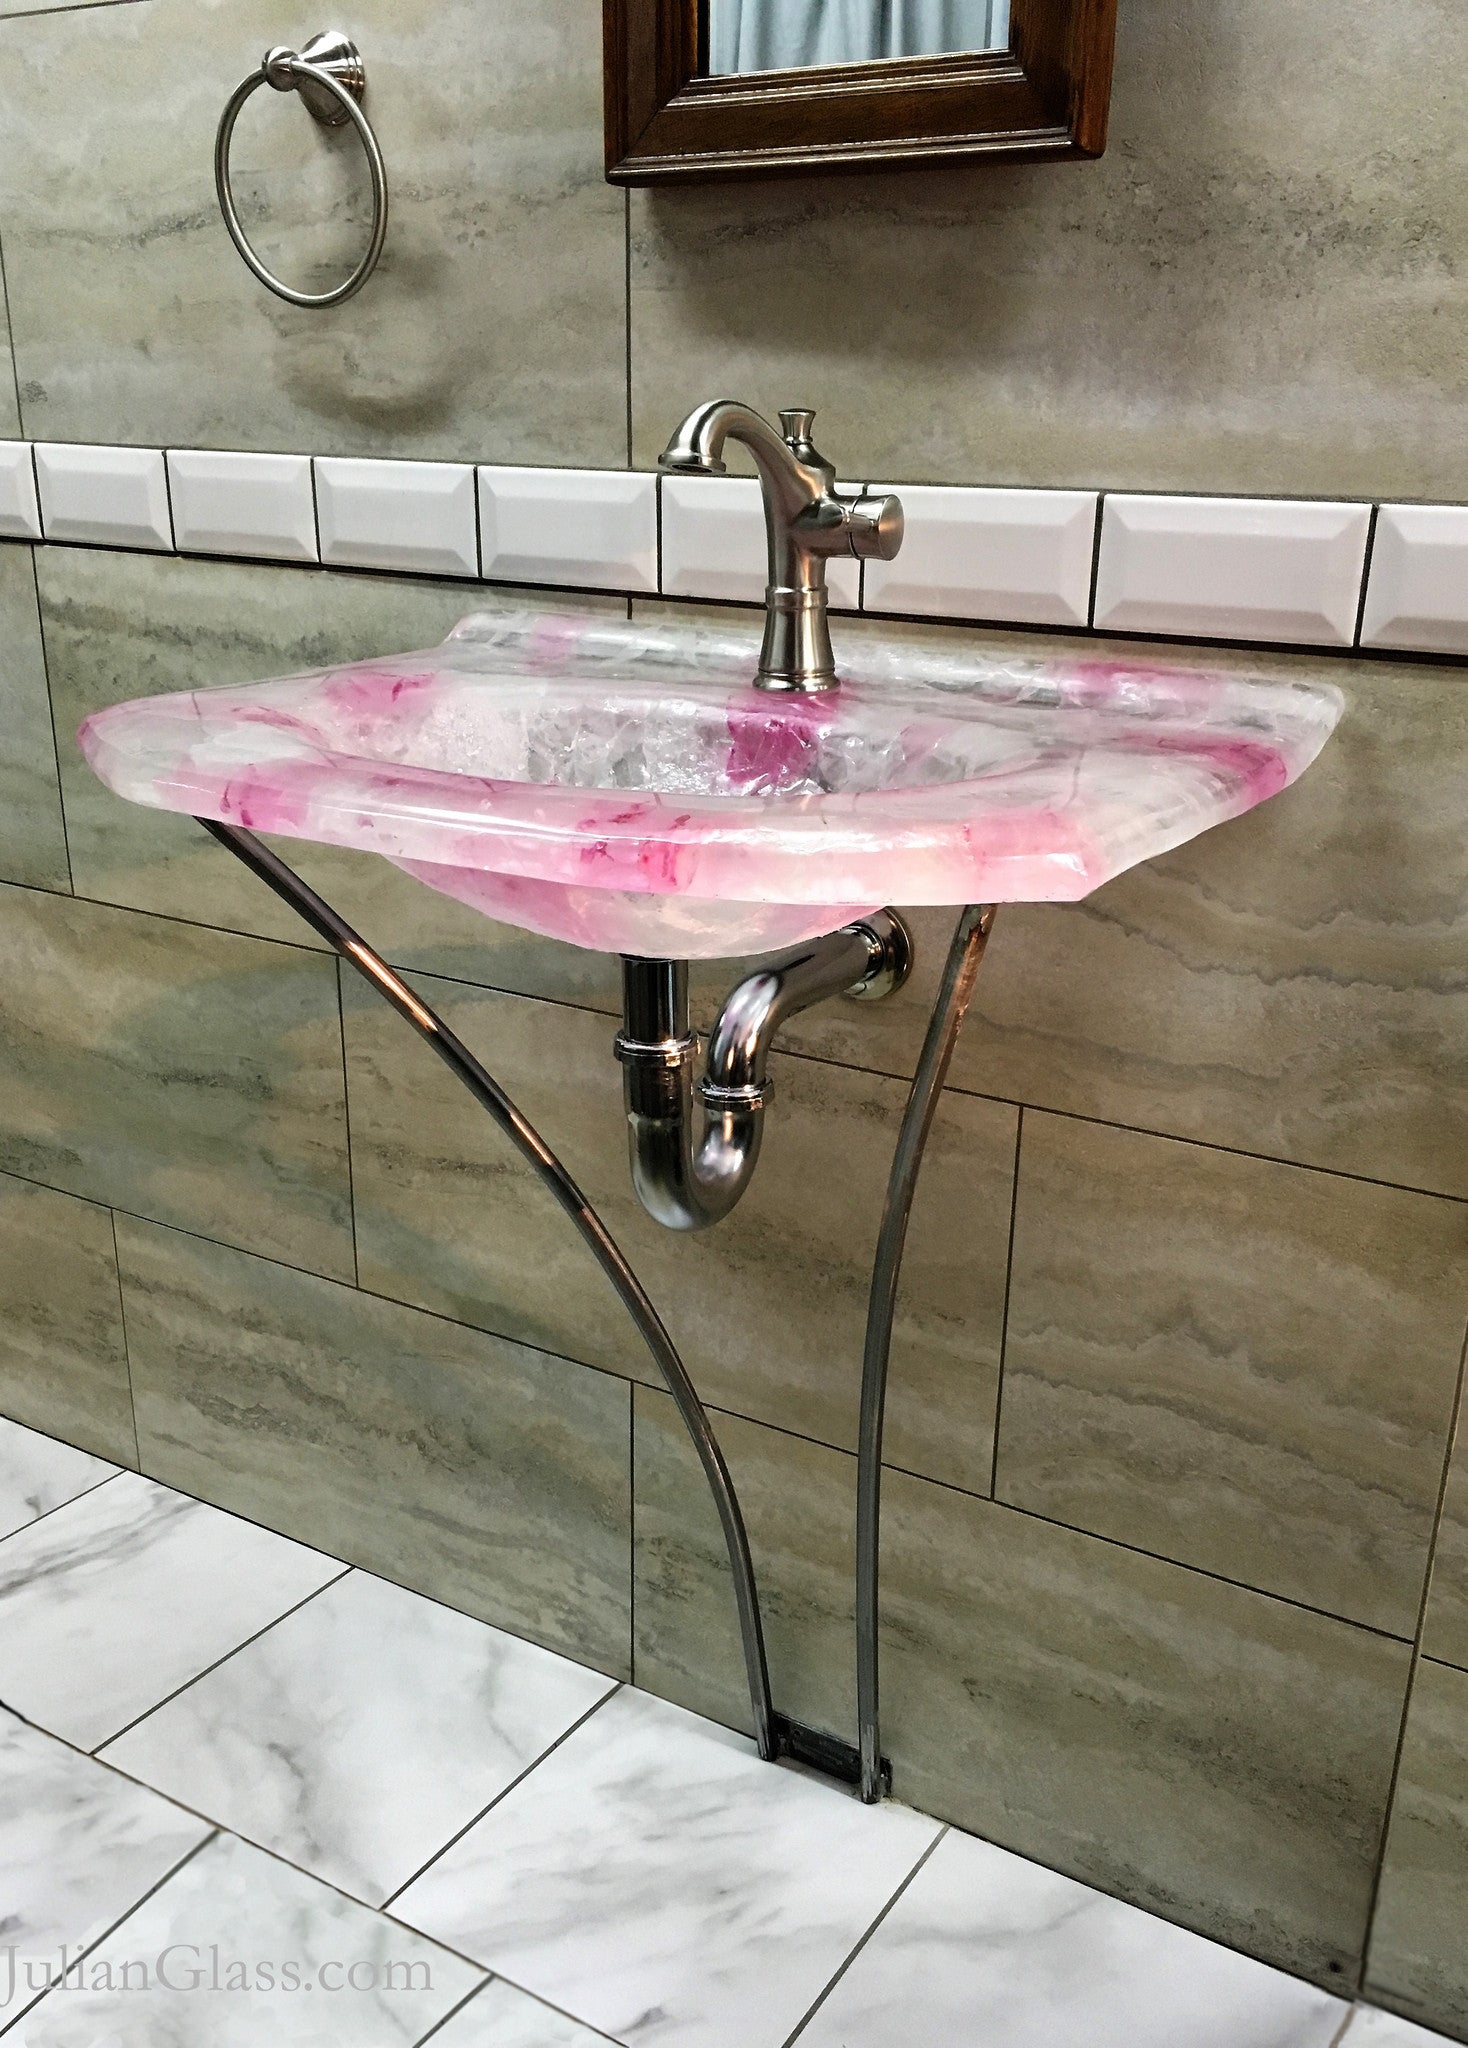 Rose Quartz Bathroom Sink Julian Glass